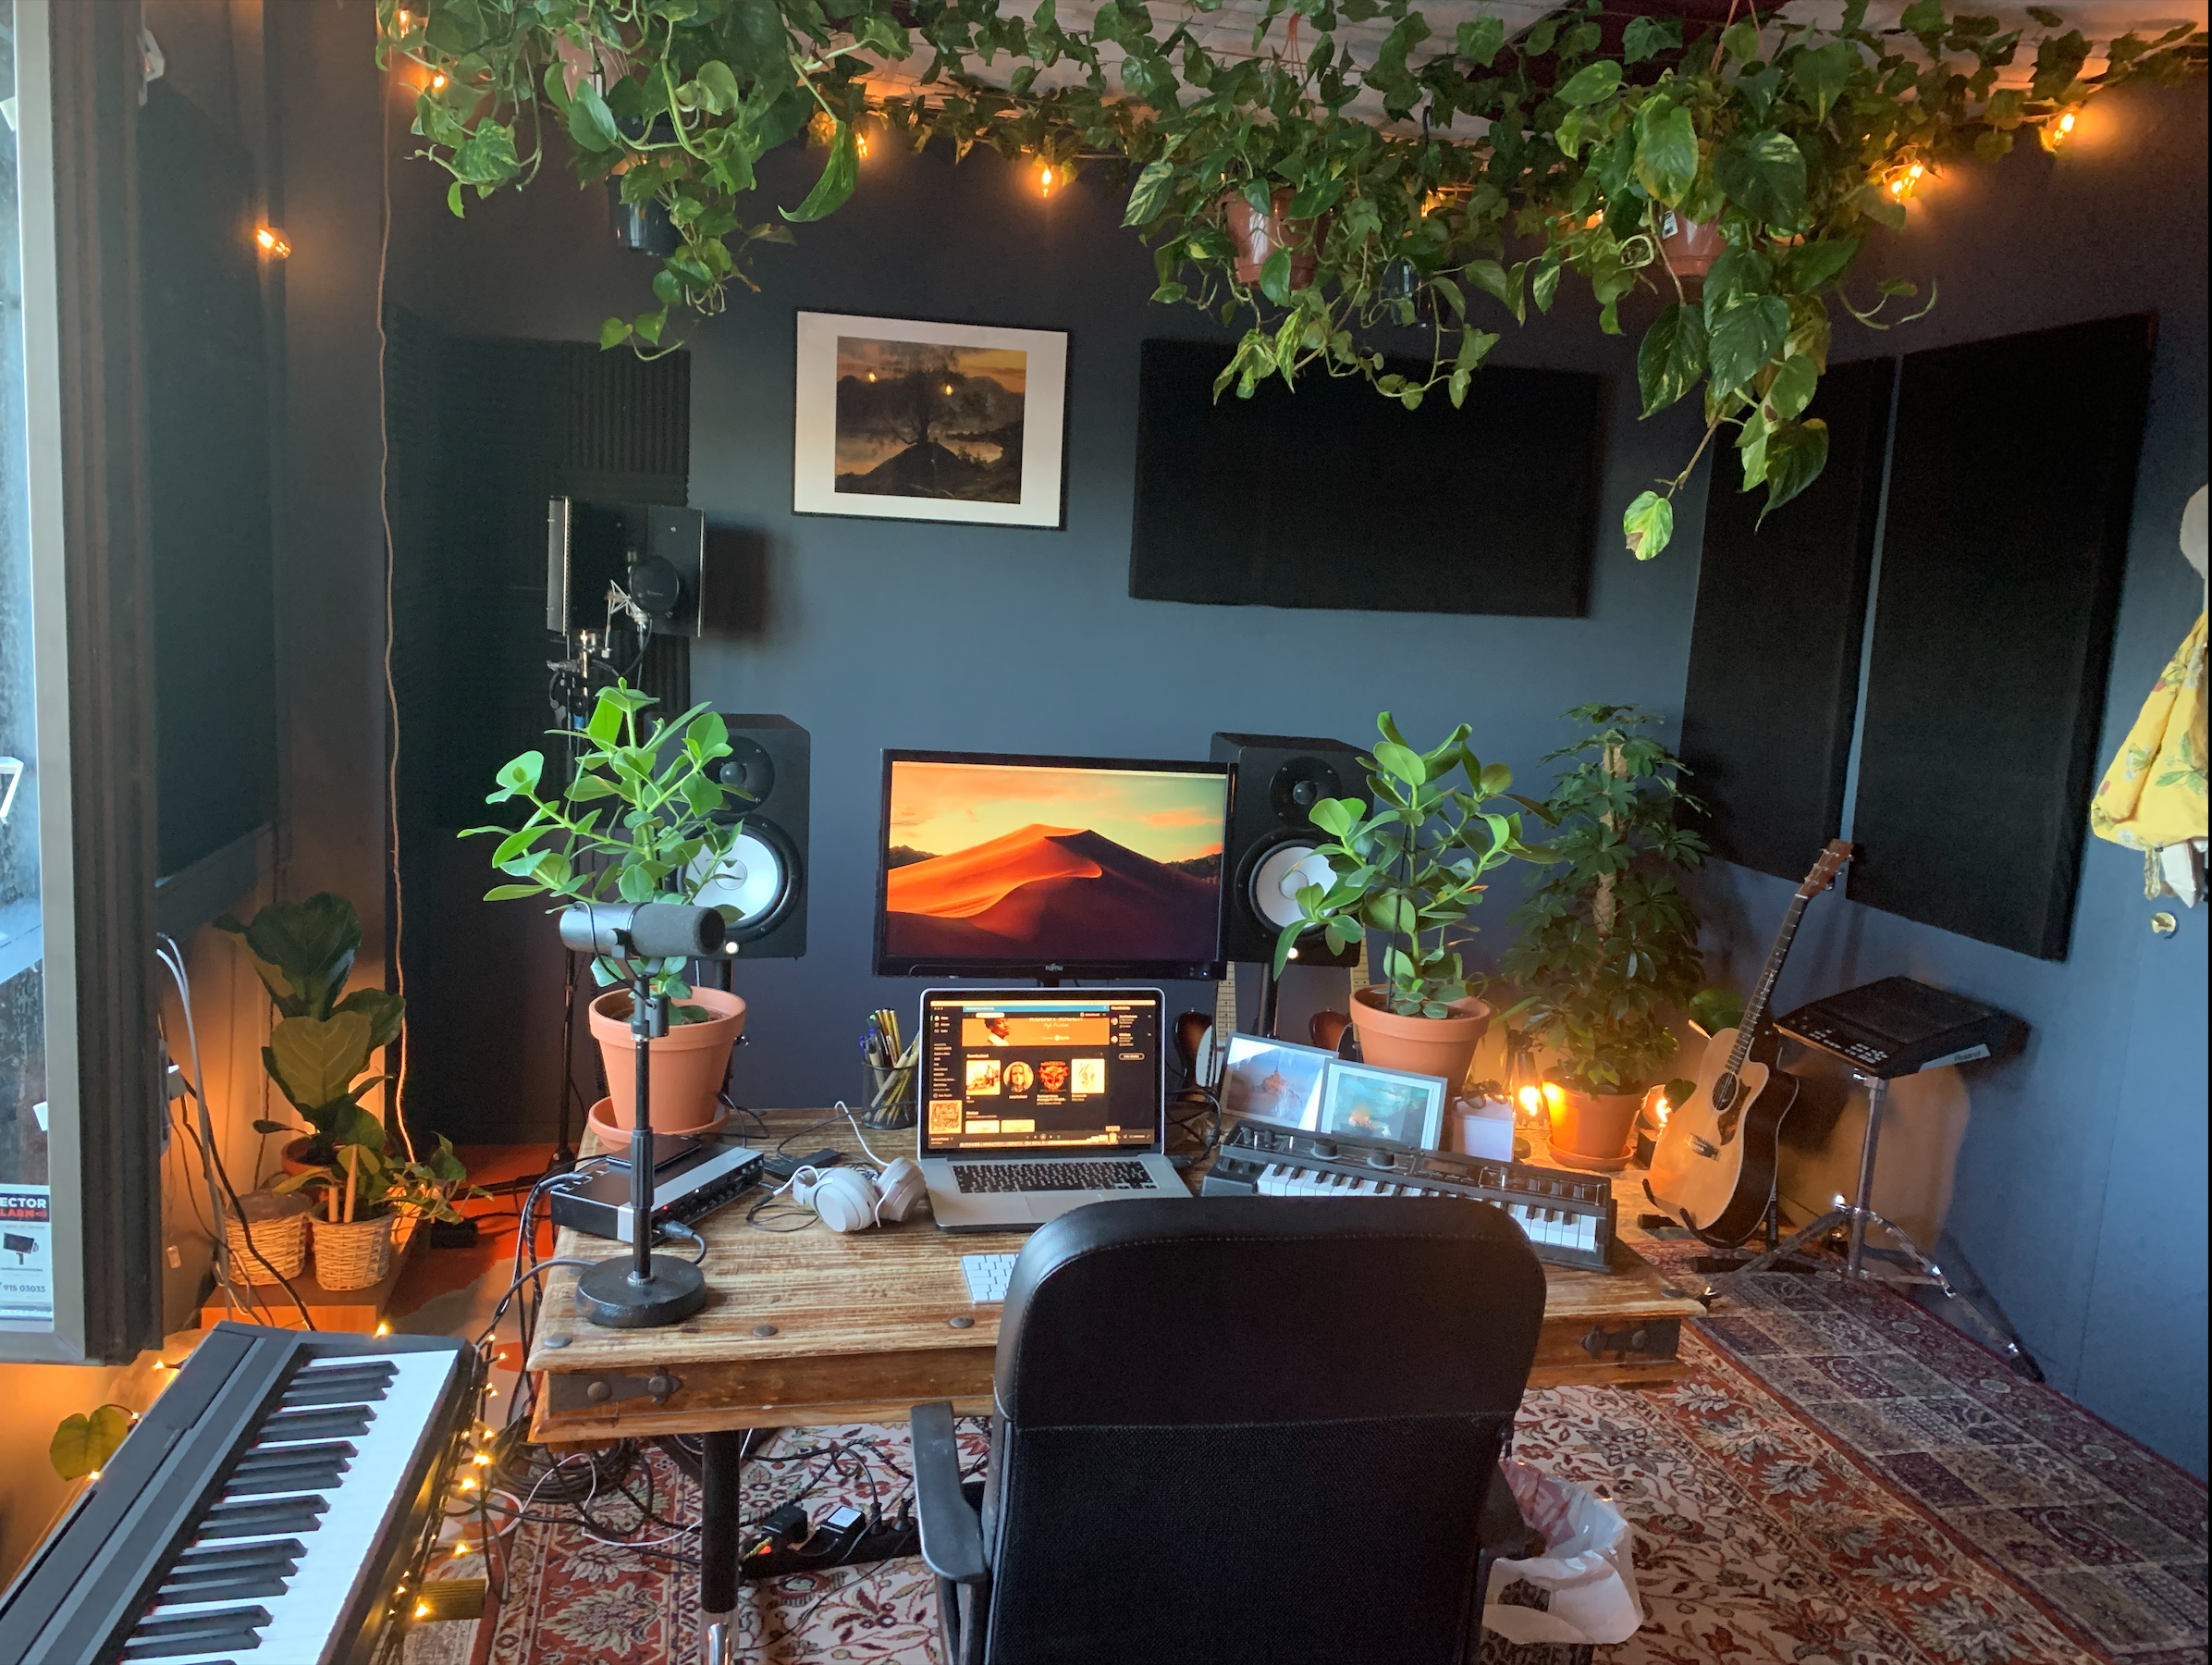 A Norwegian music studio